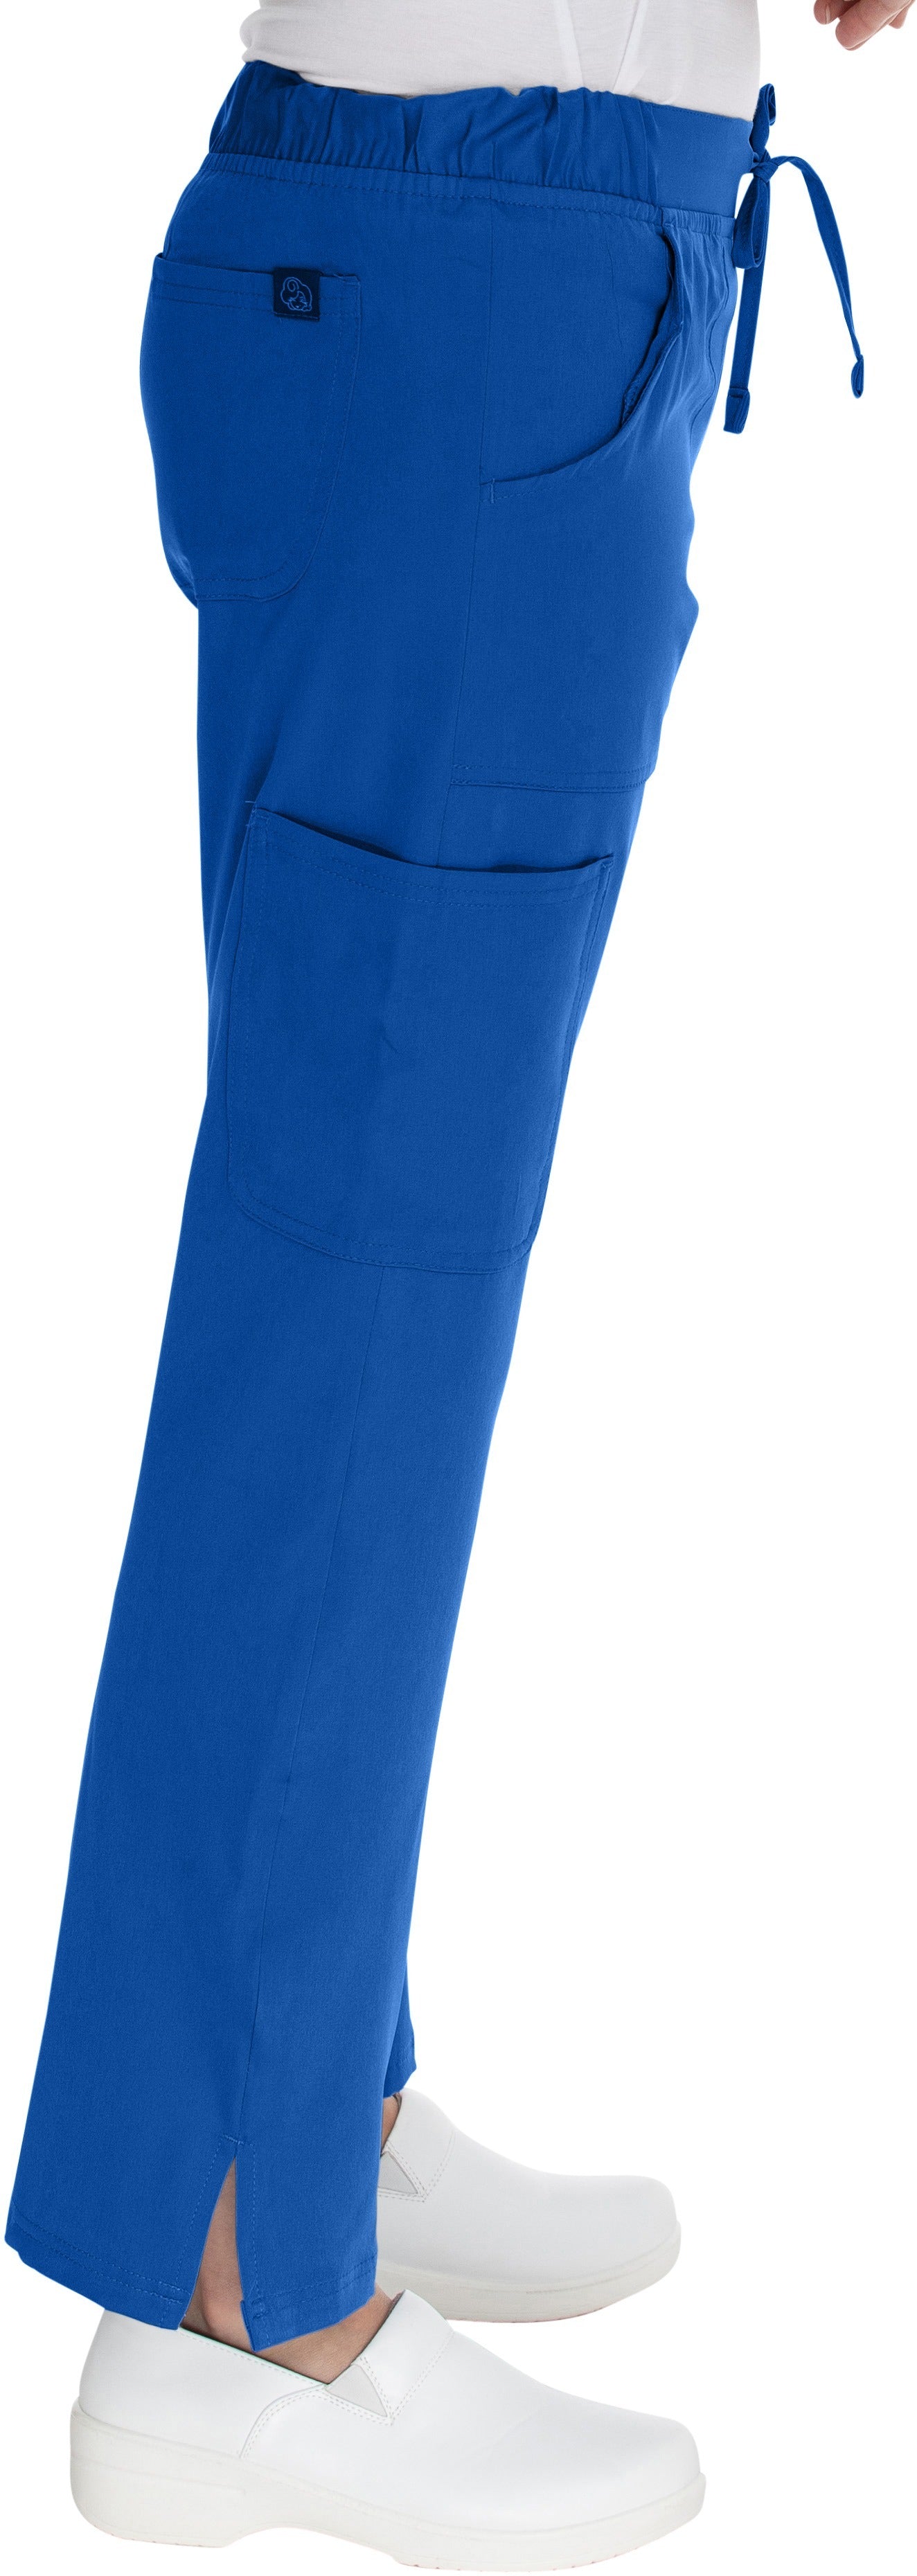 Flat Front Elastic Waist Pant By MediChic XXS-5X / Ceil